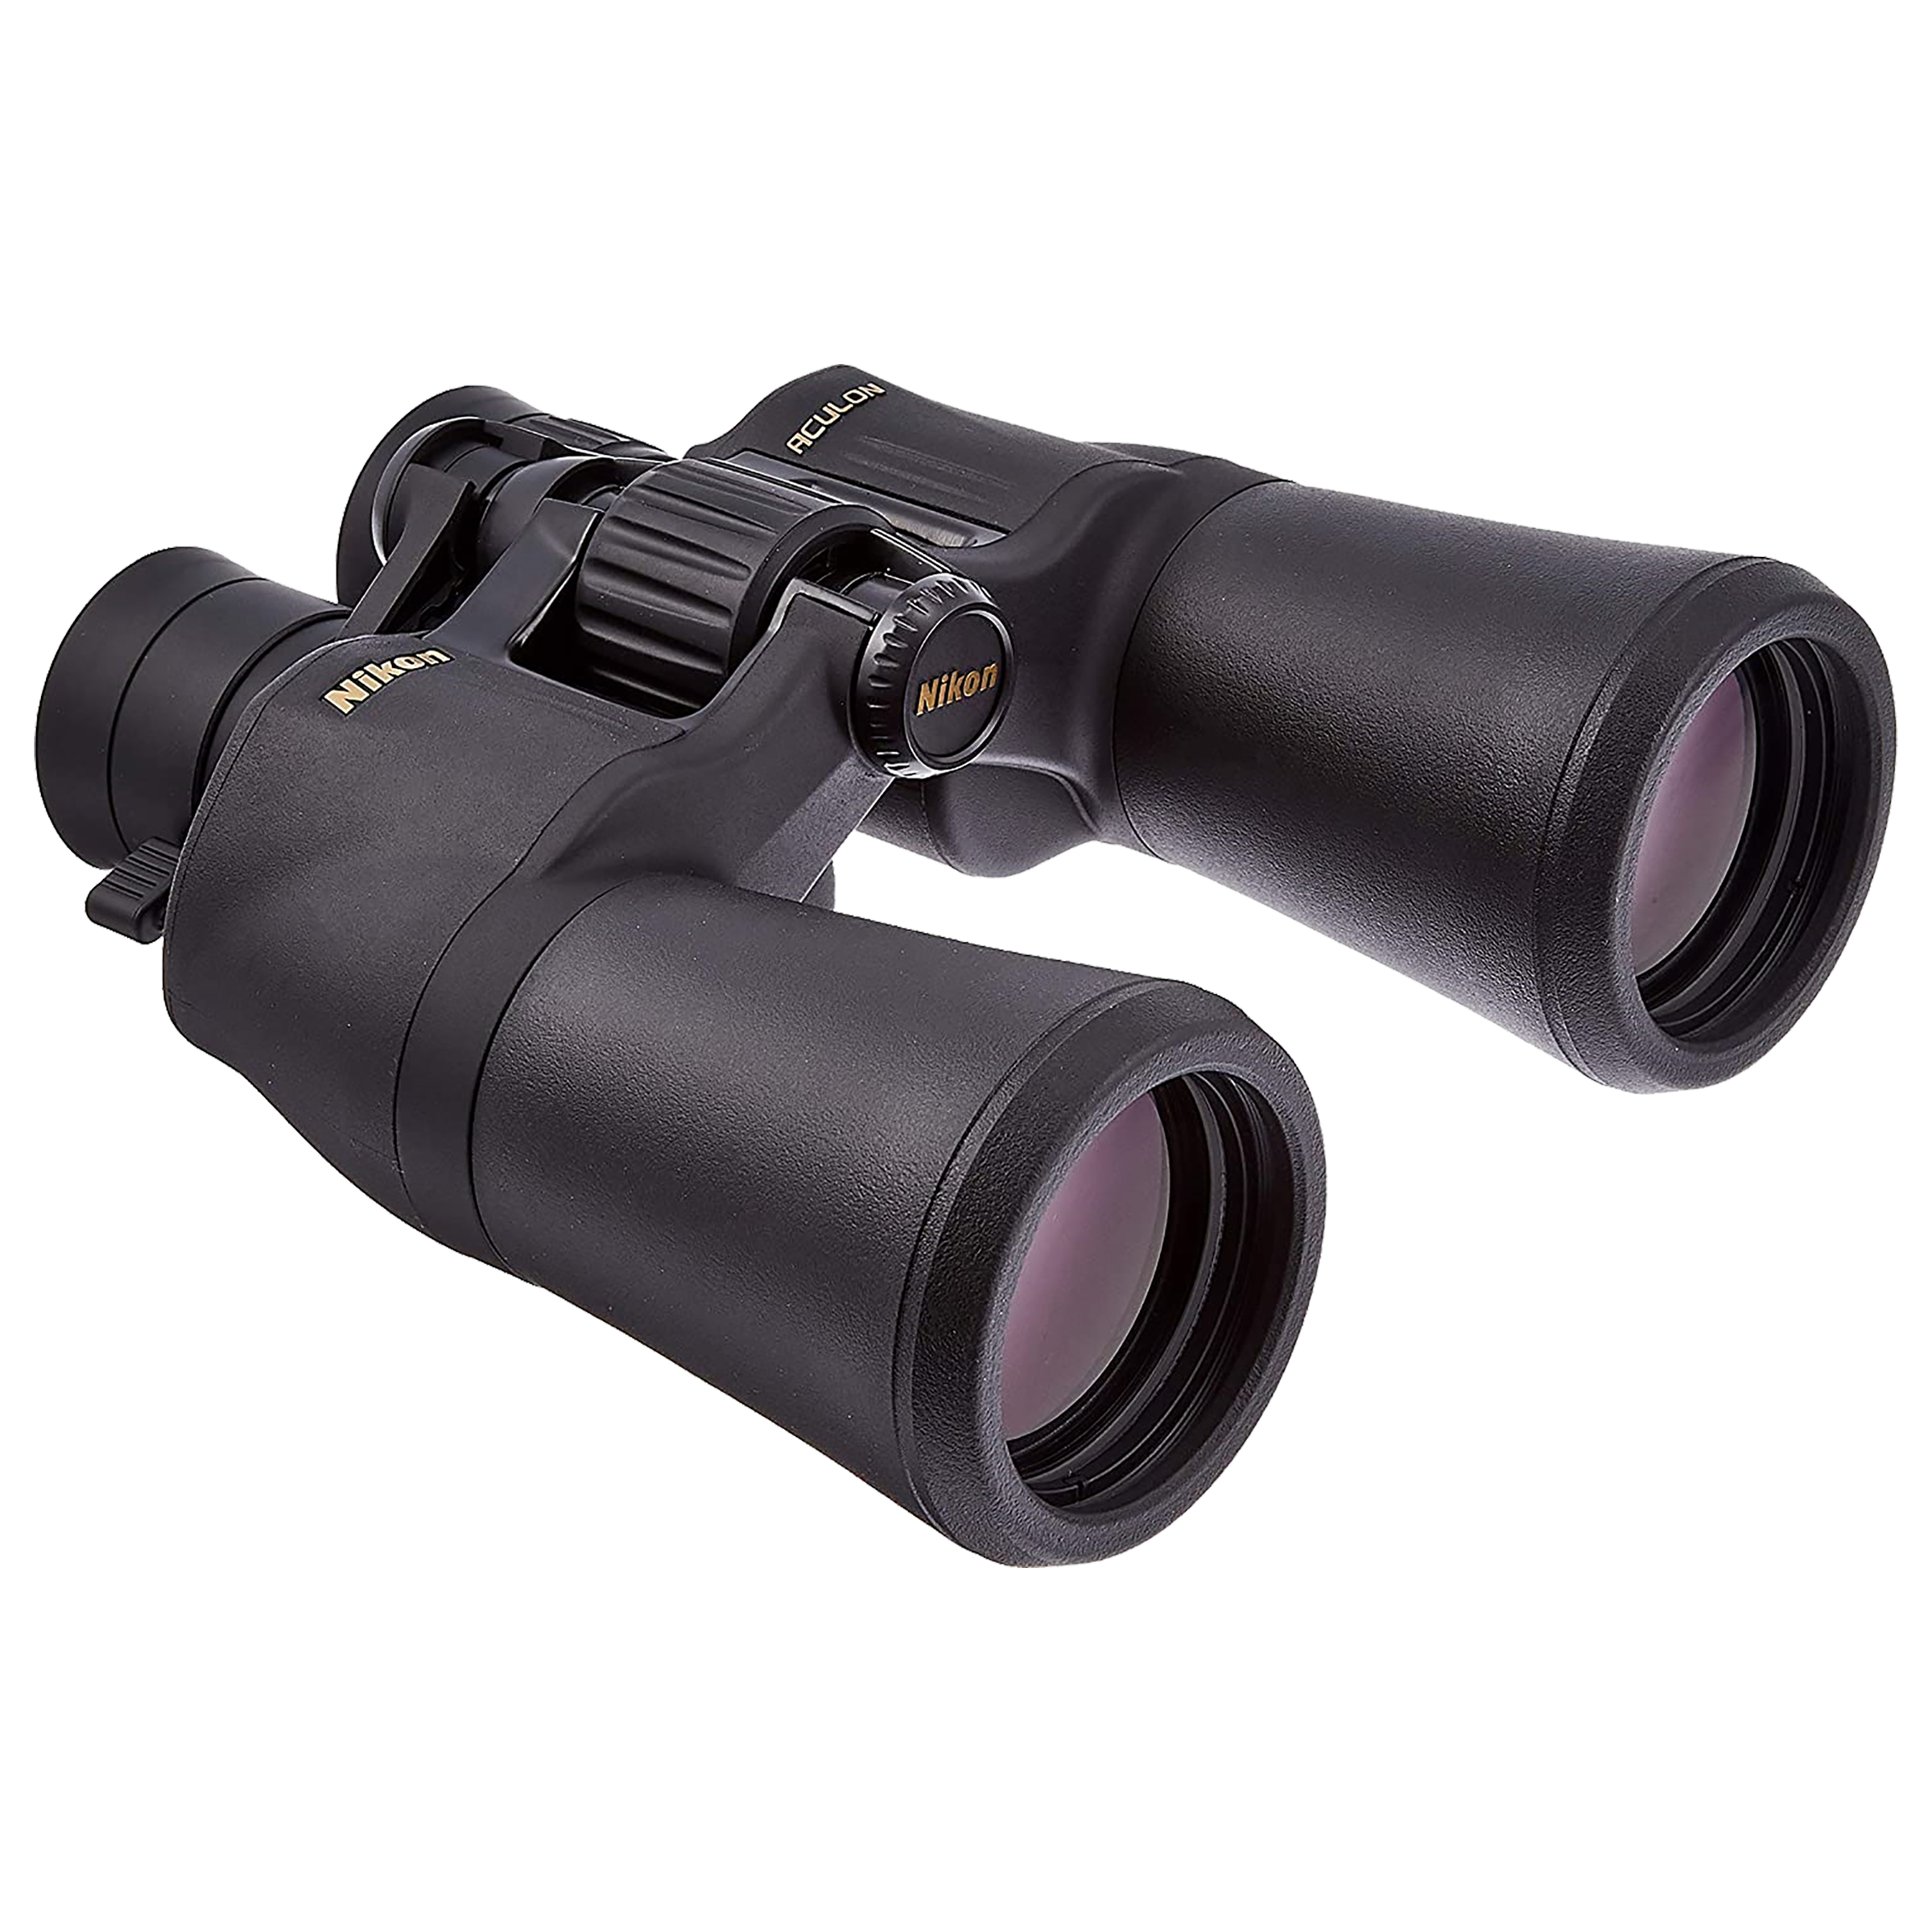 Nikon Aculon 22x 50mm Porro Prism Optical Binoculars (High Quality Image, BAA818SA, Black)_1